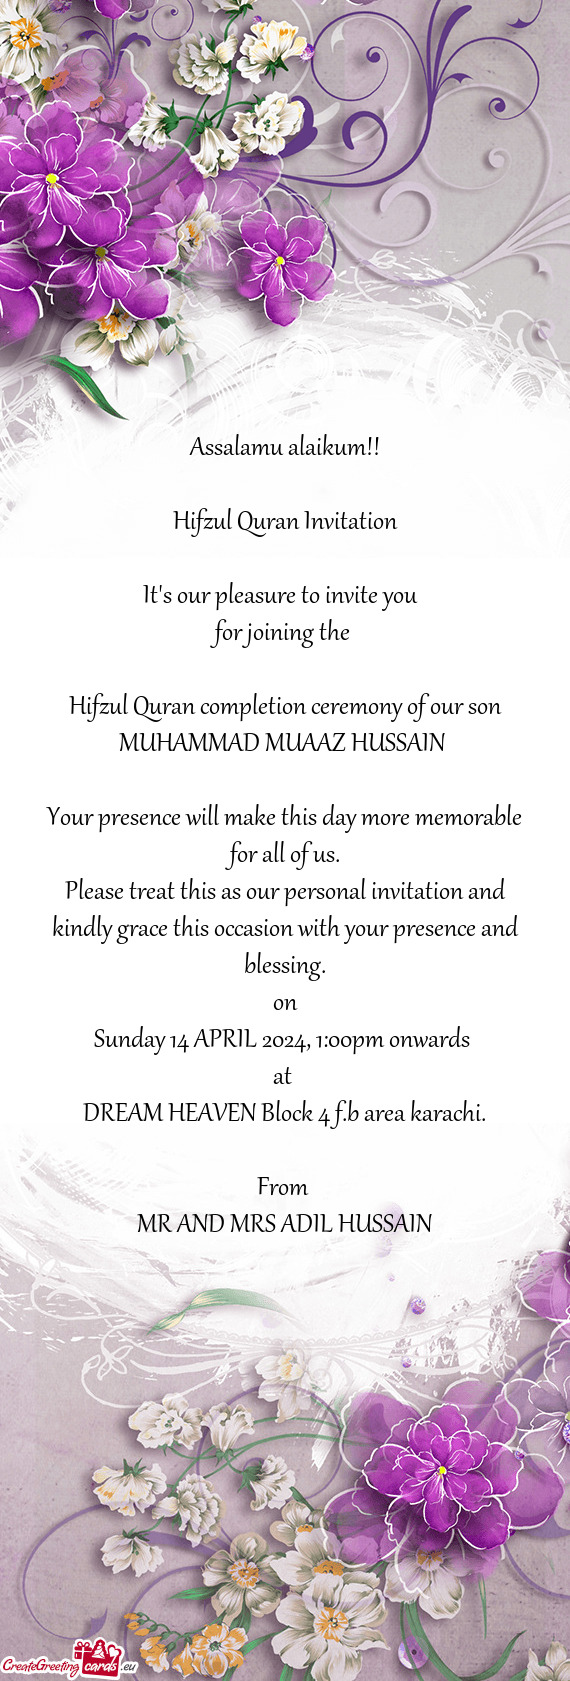 Hifzul Quran Invitation